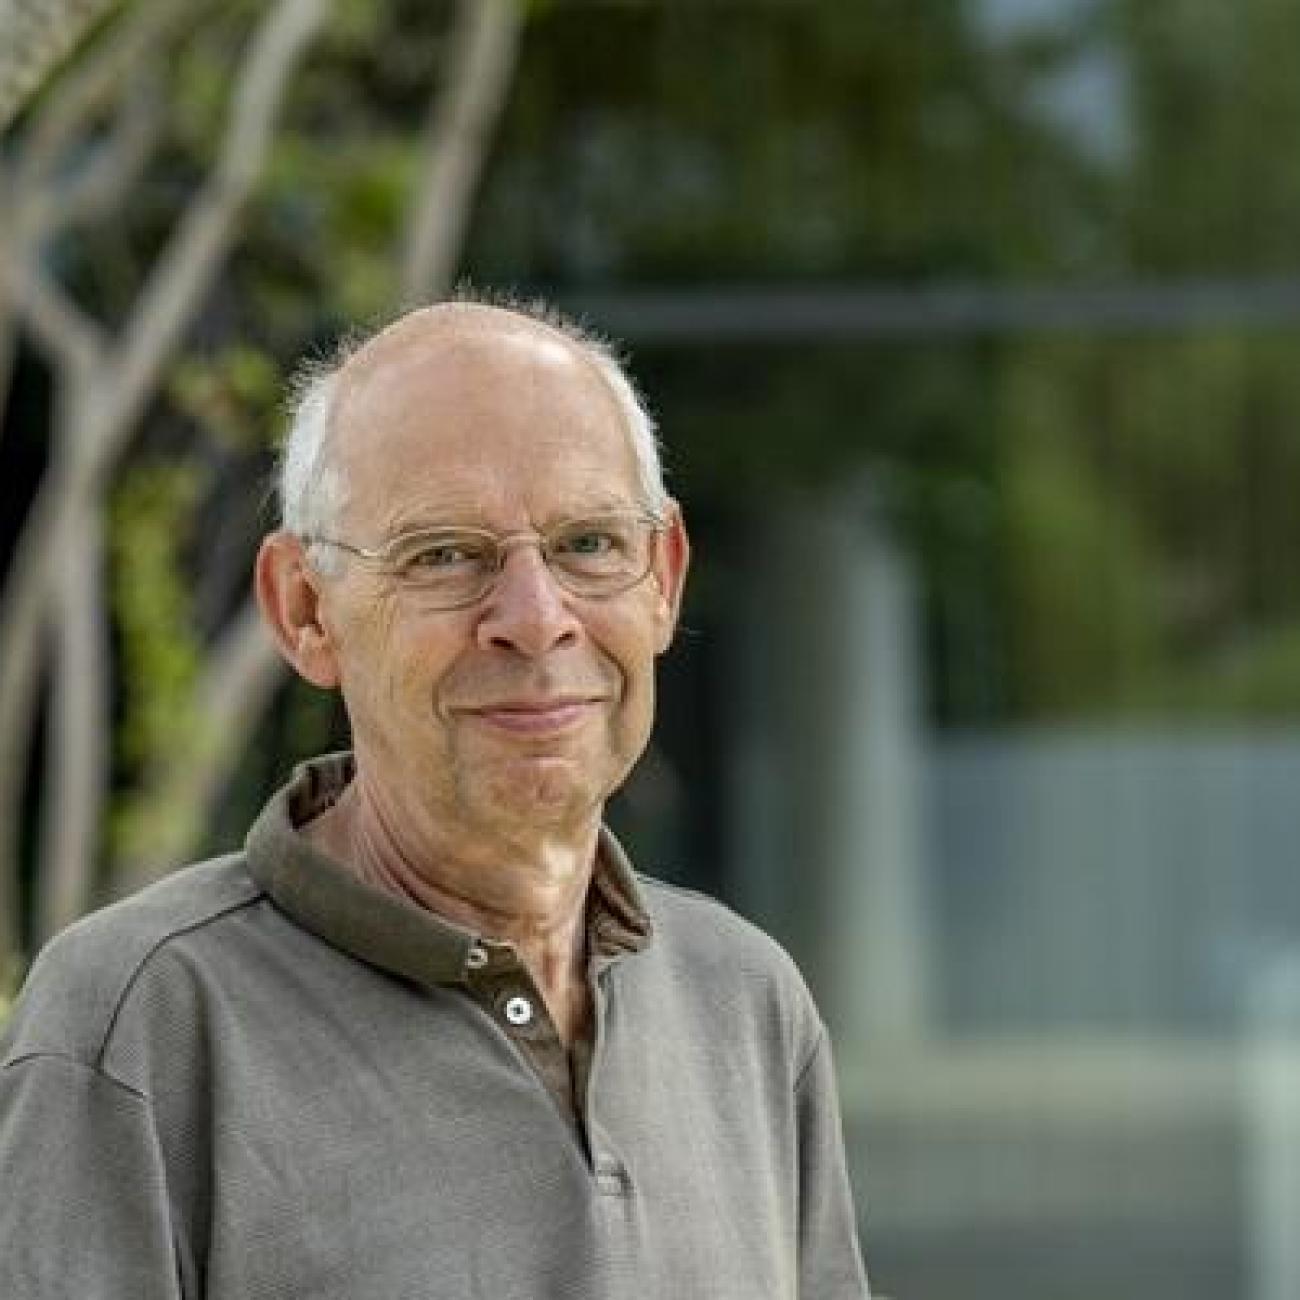 Professor Neil Sandham